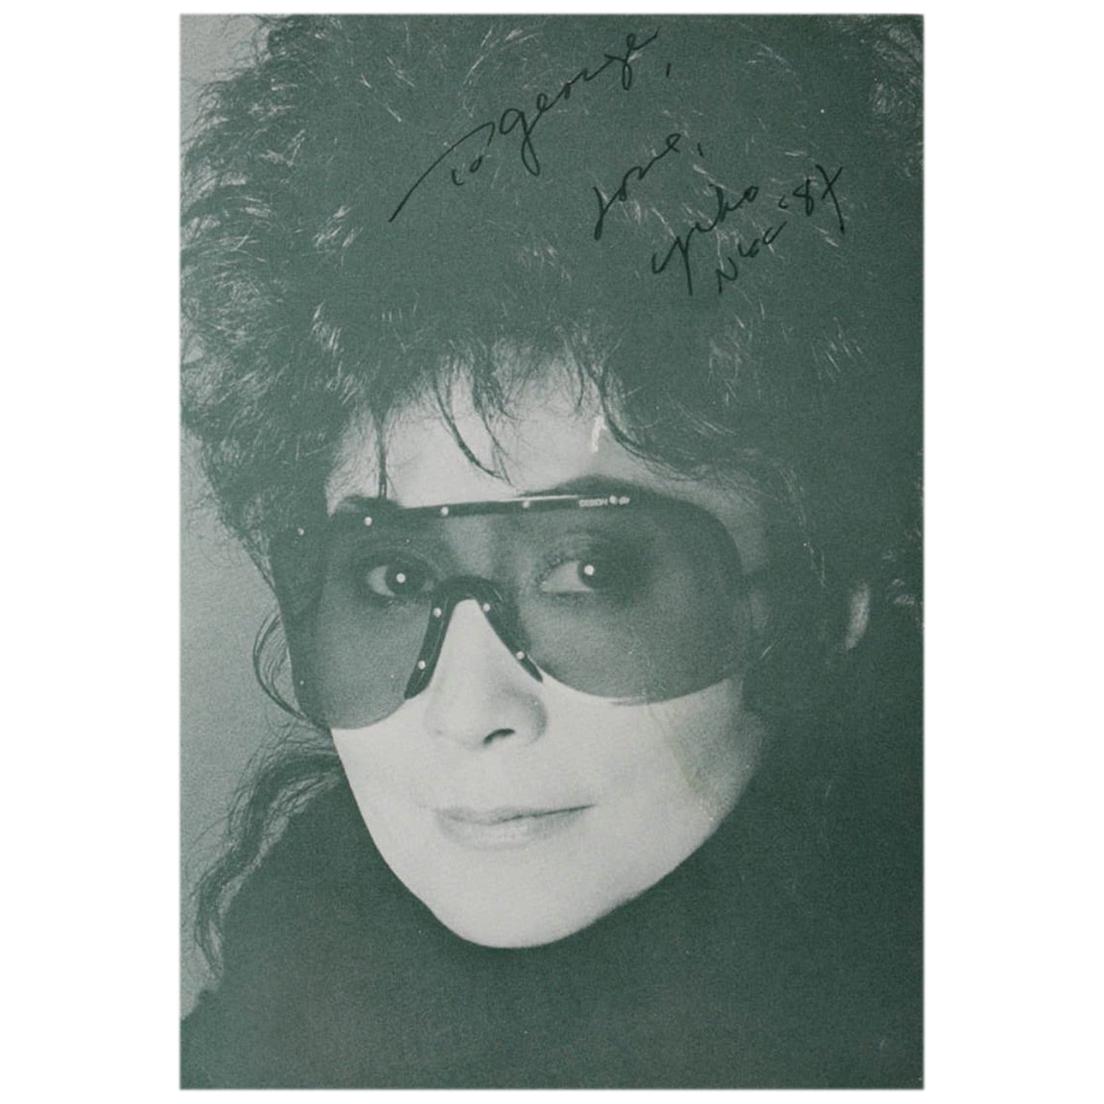 Yoko Ono Autographed Photograph, JSA Certificate of Authentication, circa 1970 For Sale